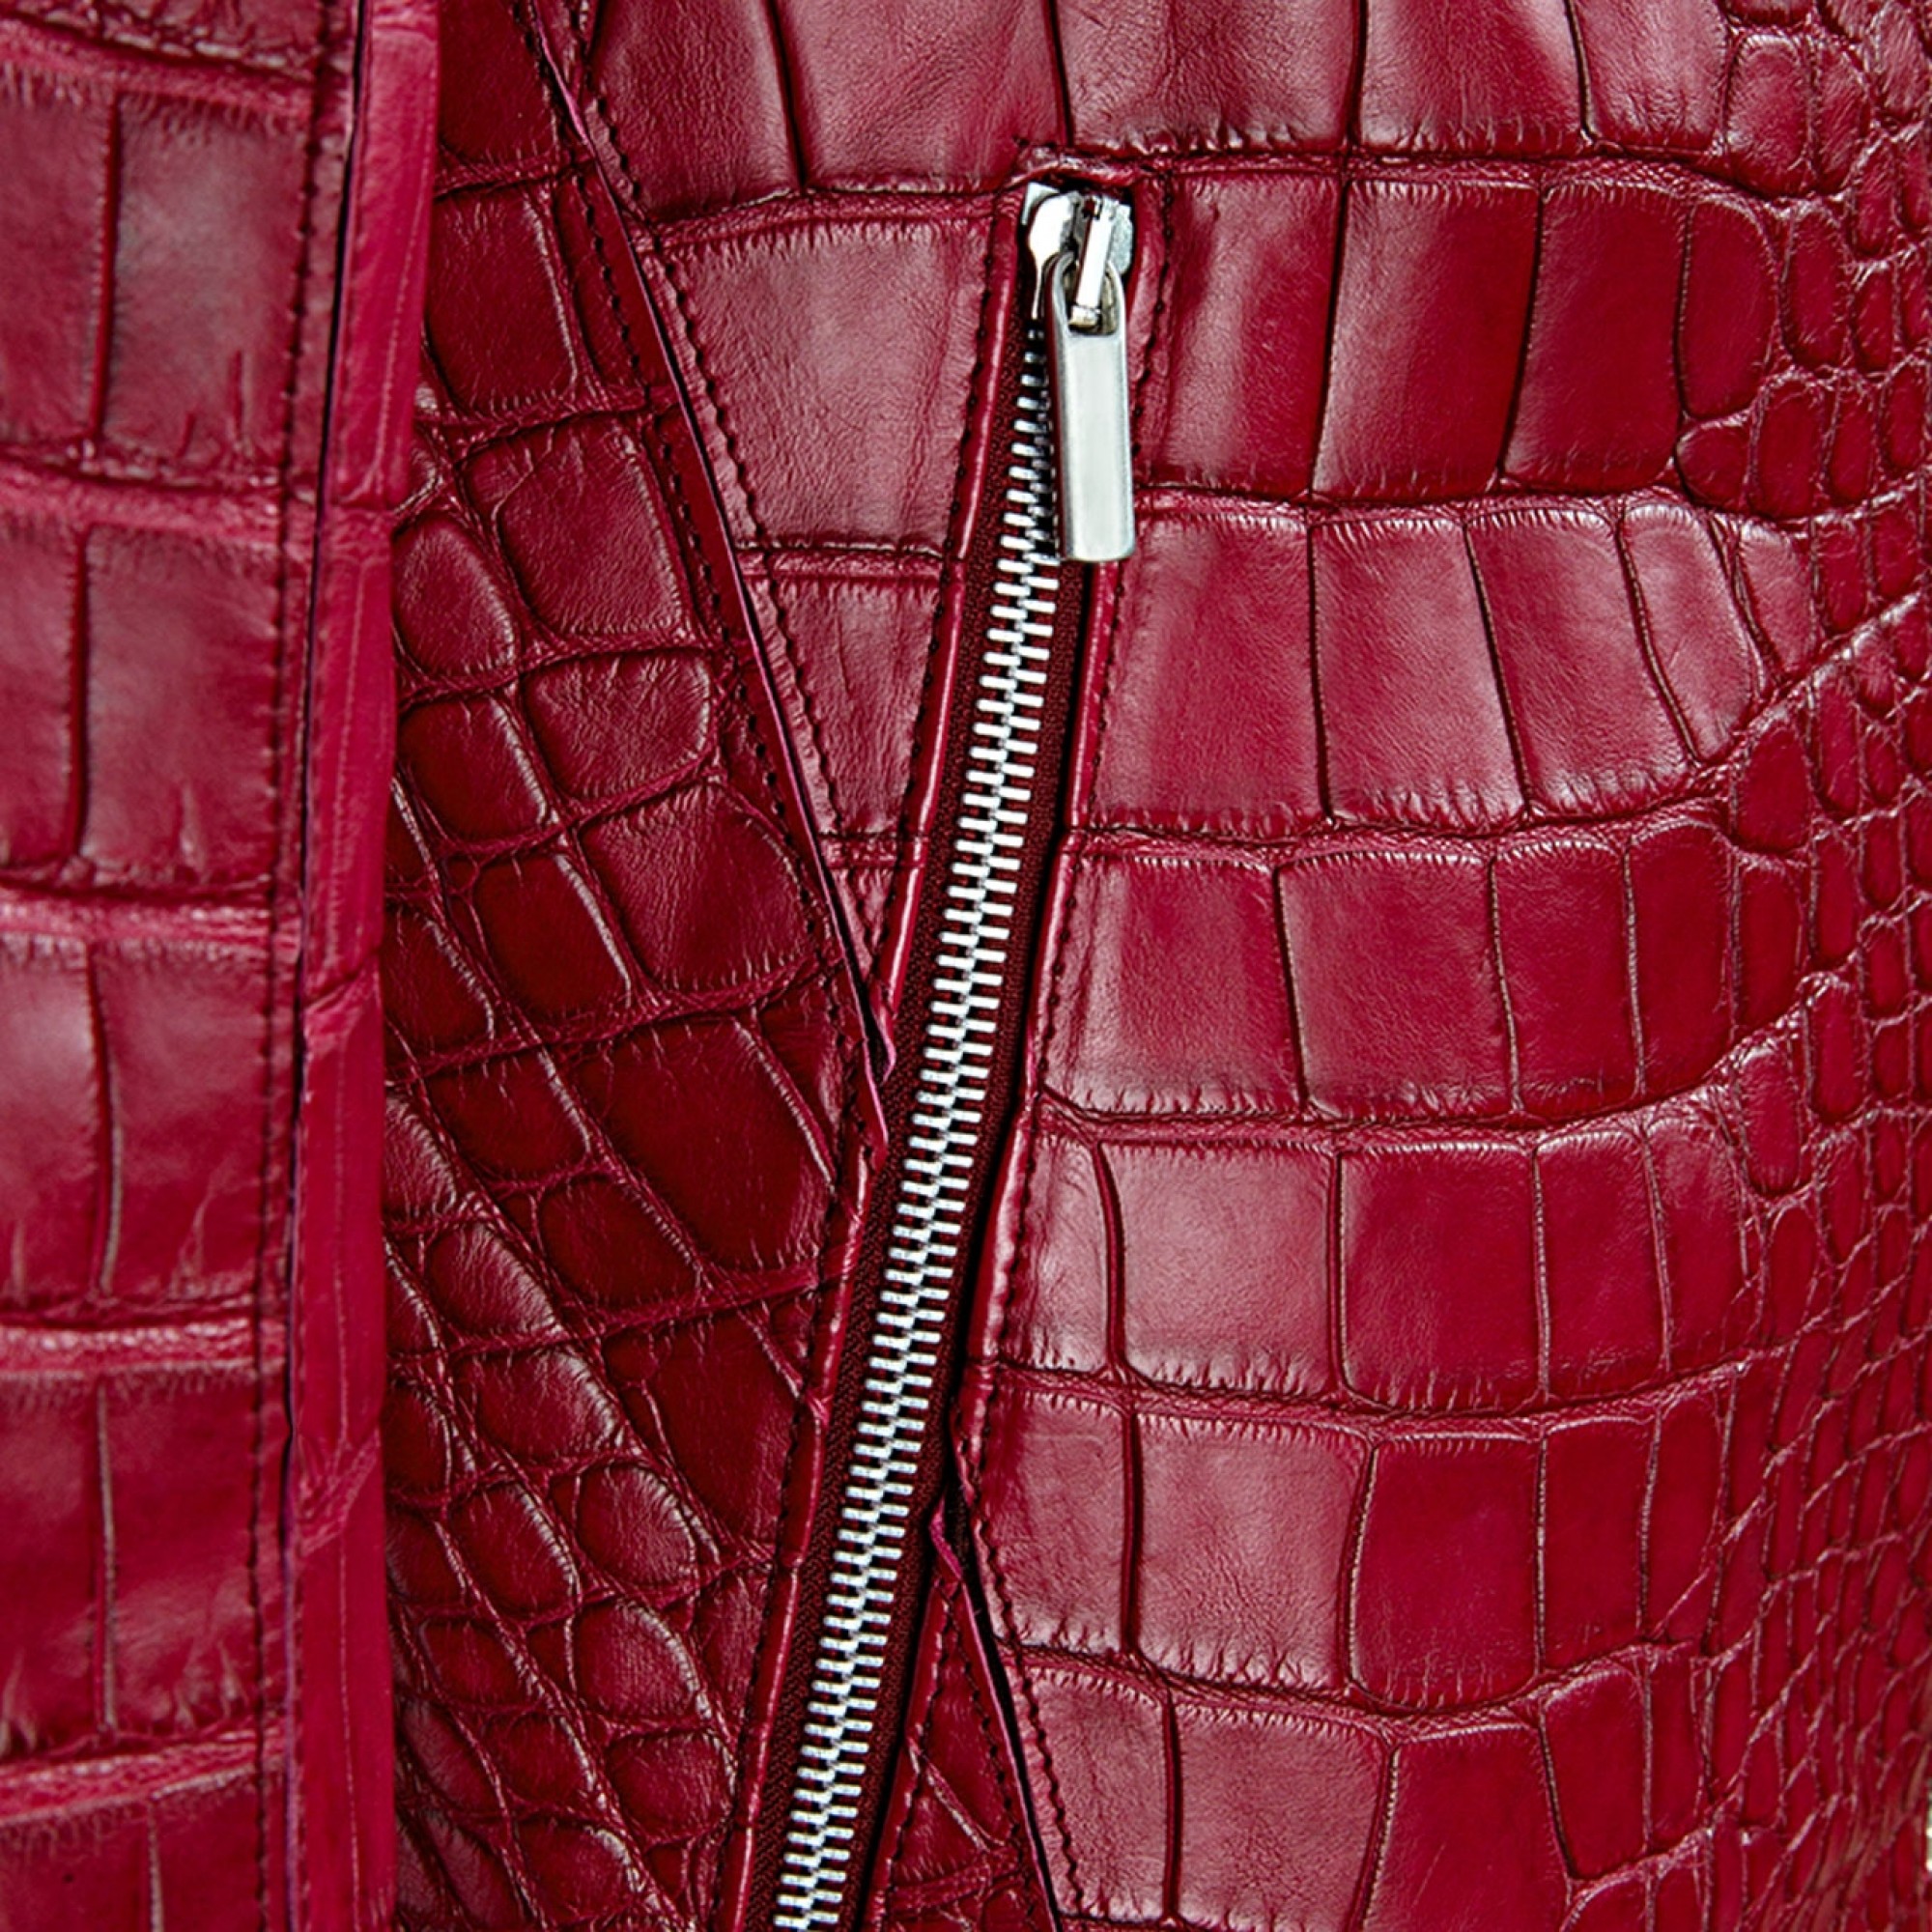 Leather Crocodile Jacket Luxury